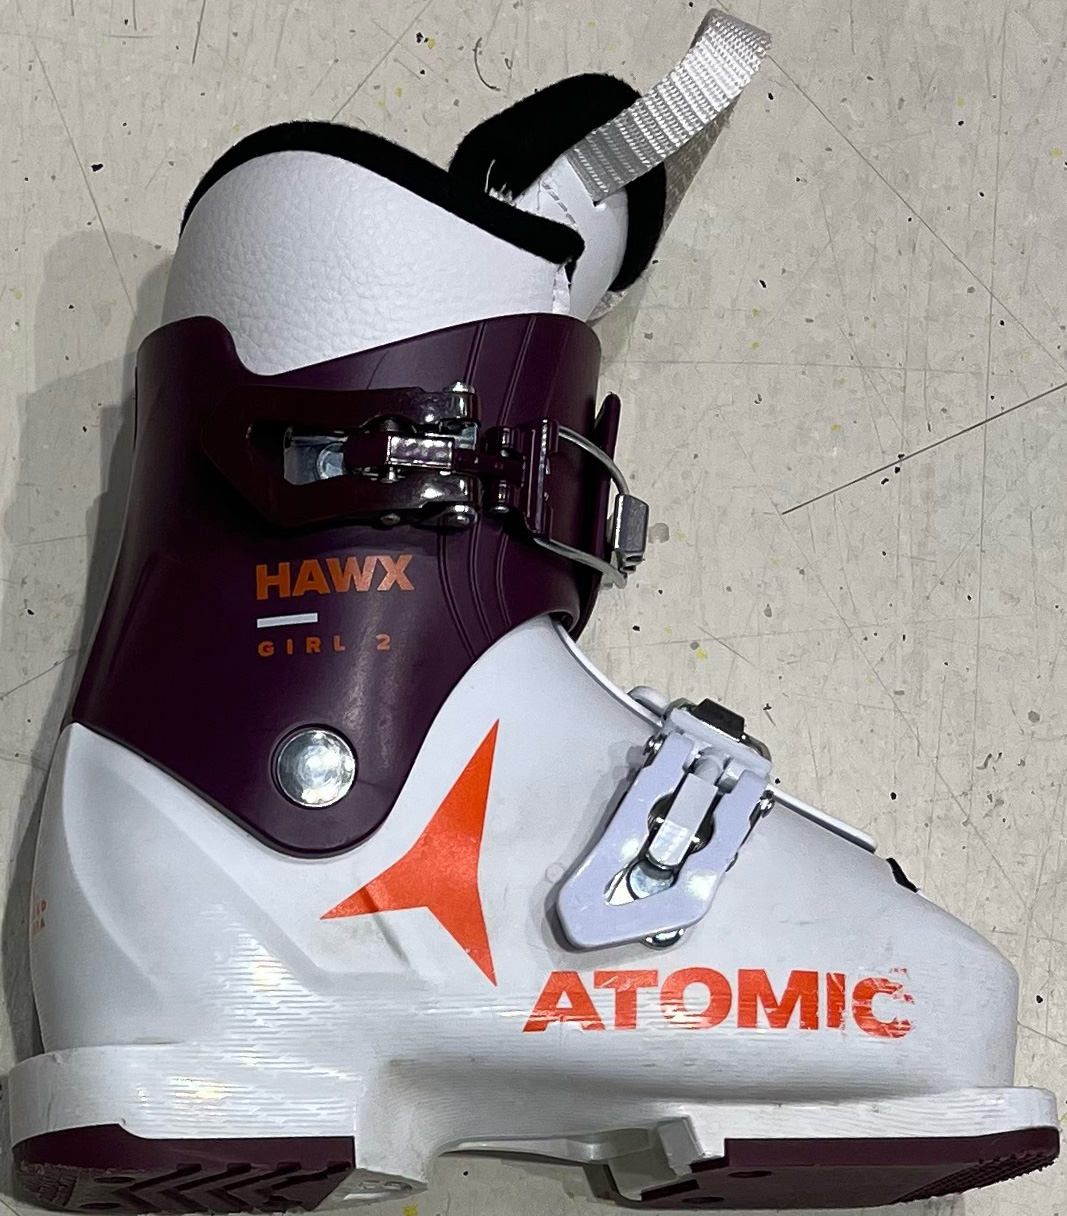 Atomic Hawx Girl 2 used ski boots